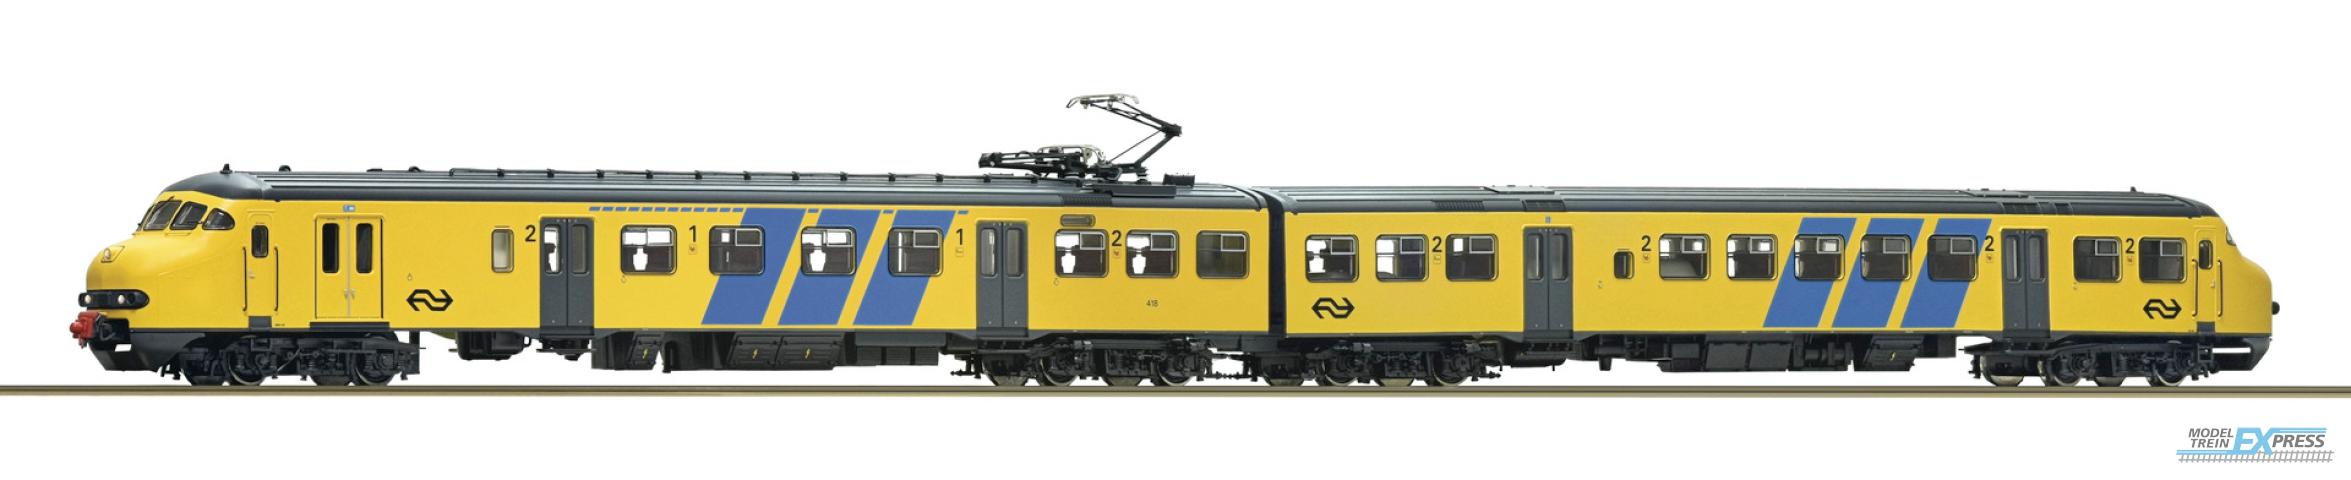 Roco 63138 E-Triebzug Plan V gelb